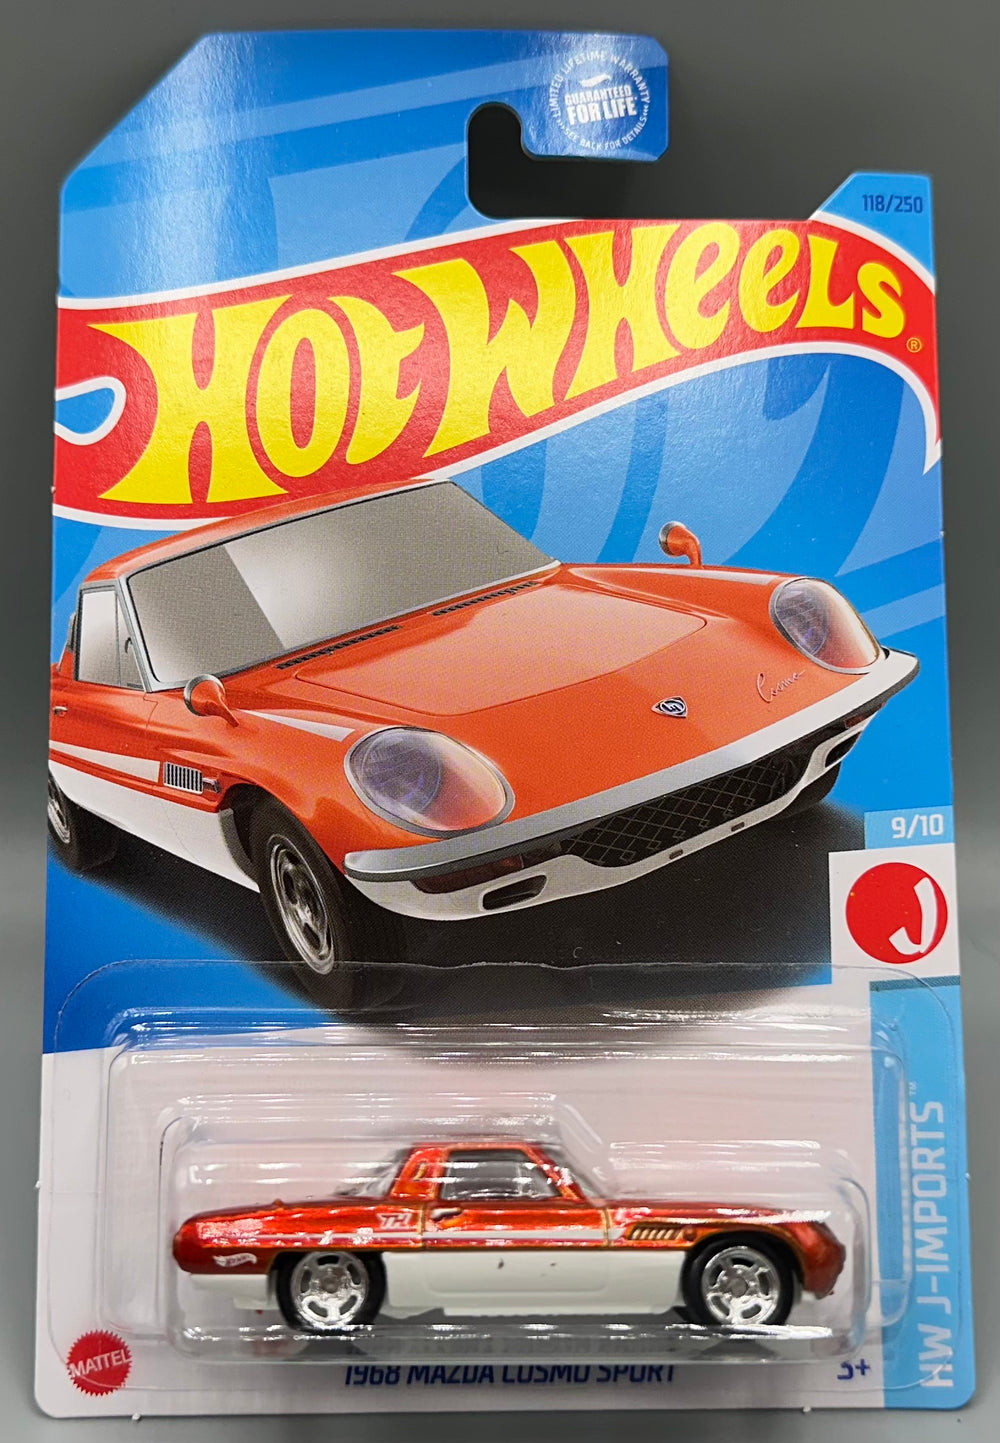 Hot Wheels Super Treasure Hunt 1968 Mazda Cosmo Sport